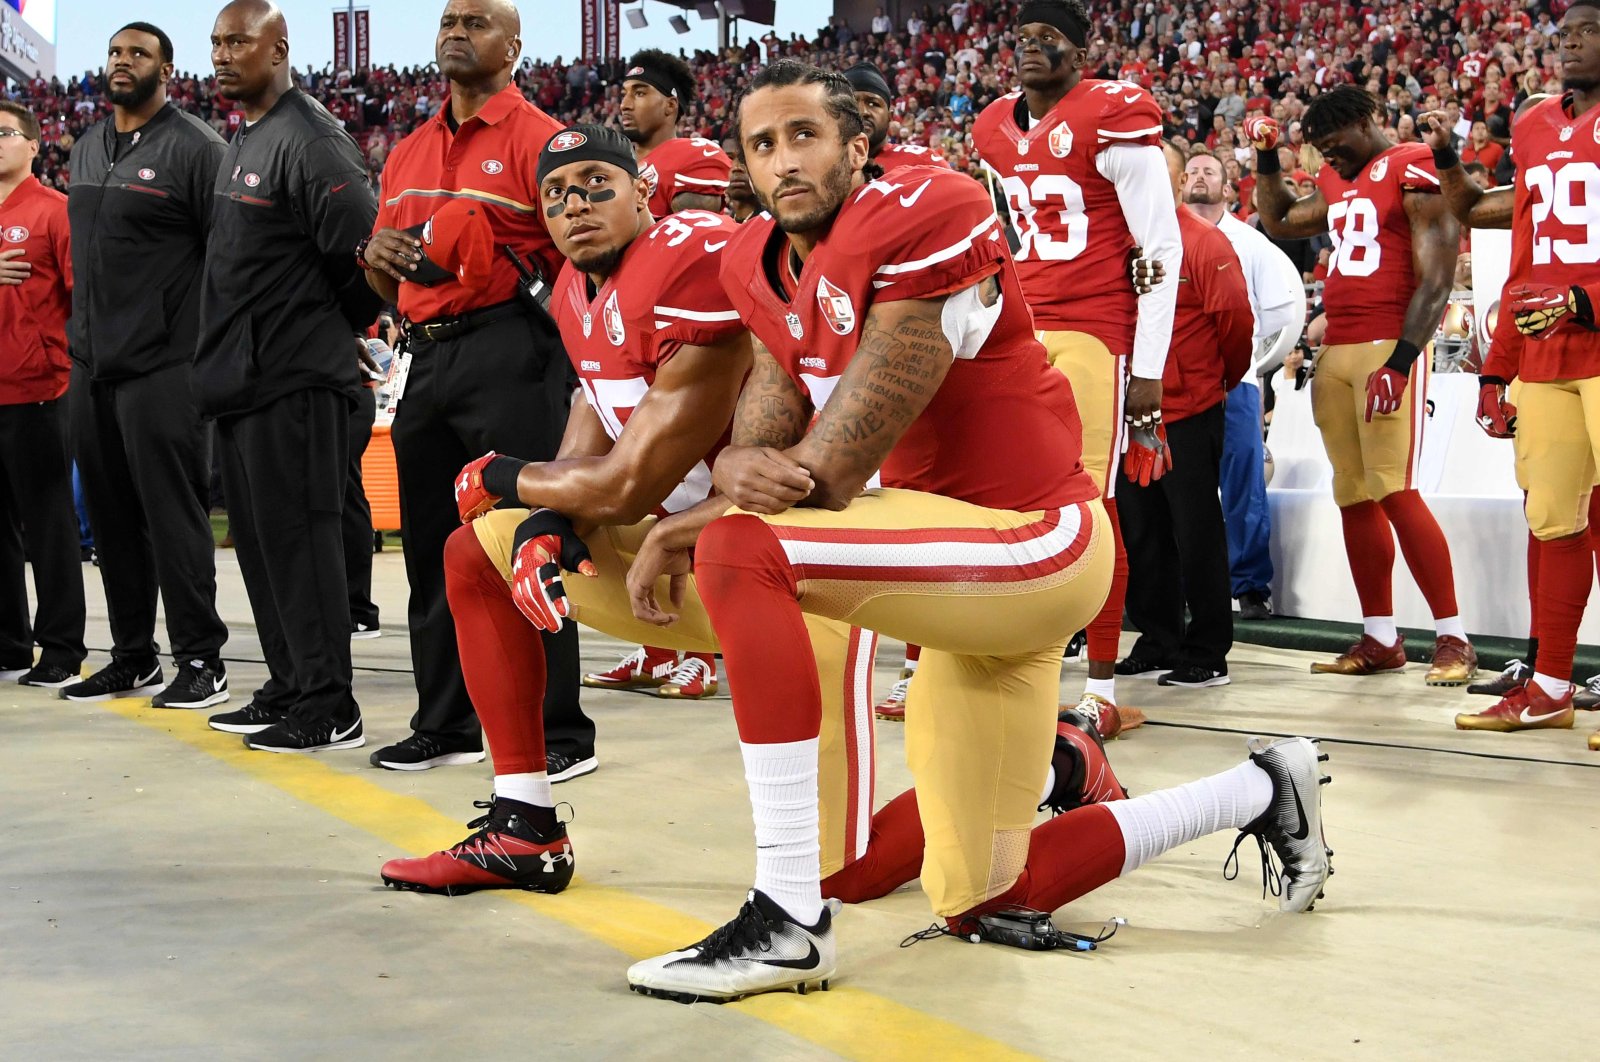 Colin Kaepernick, front, kneel in protest during the U.S. national anthem prior to an NFL game in Santa Clara, Calif., U.S., Sept. 12, 2016. (AFP Photo)